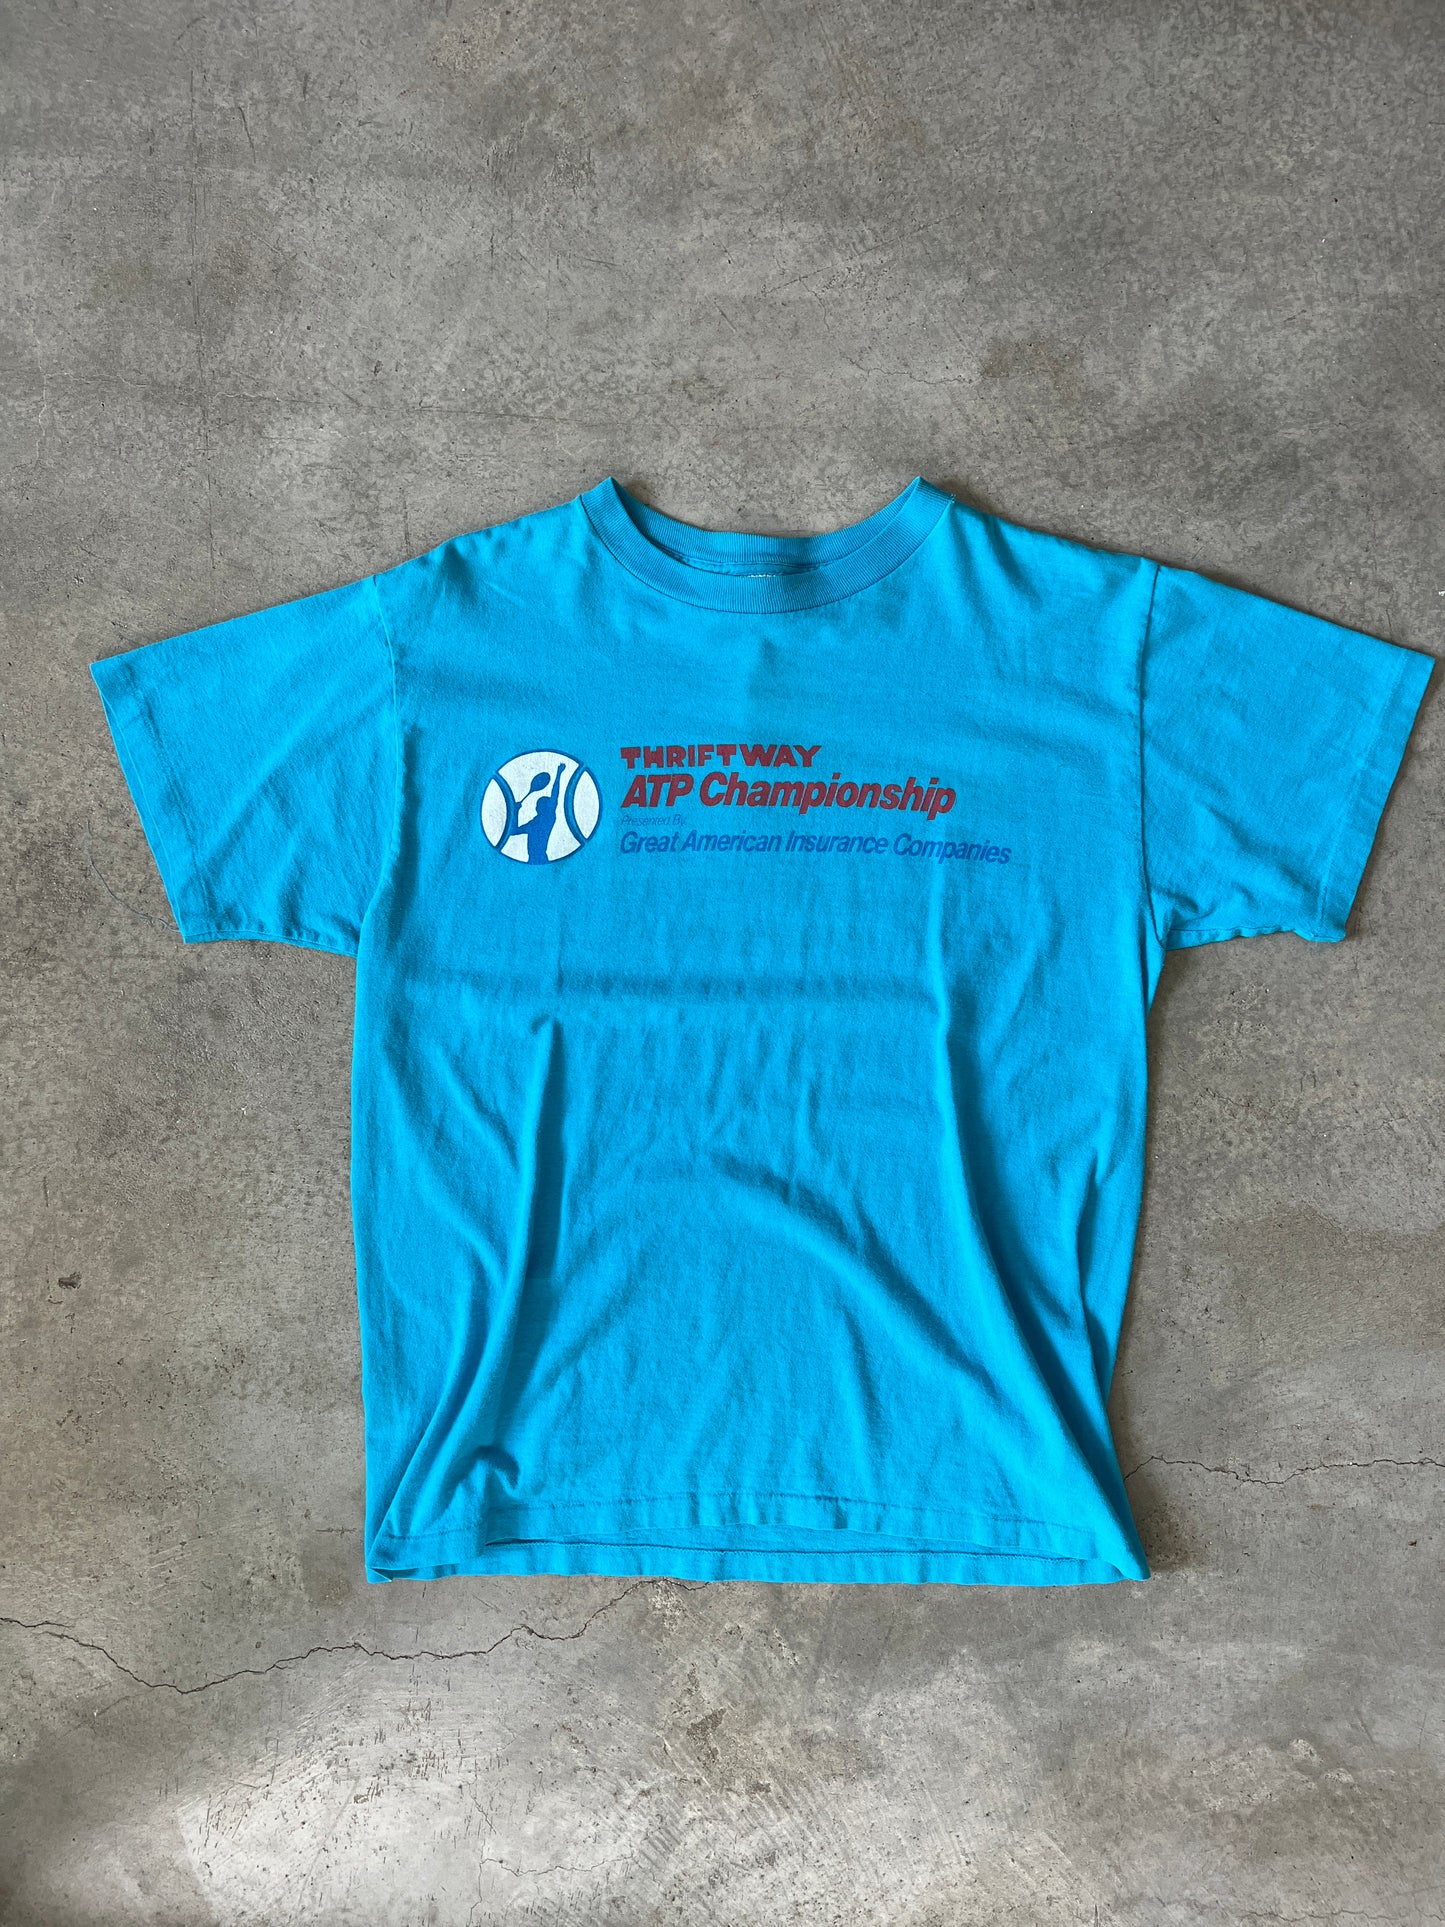 Vintage Thriftway ATP Championship (Cincinnati Open) T-Shirt (circa 1990s)